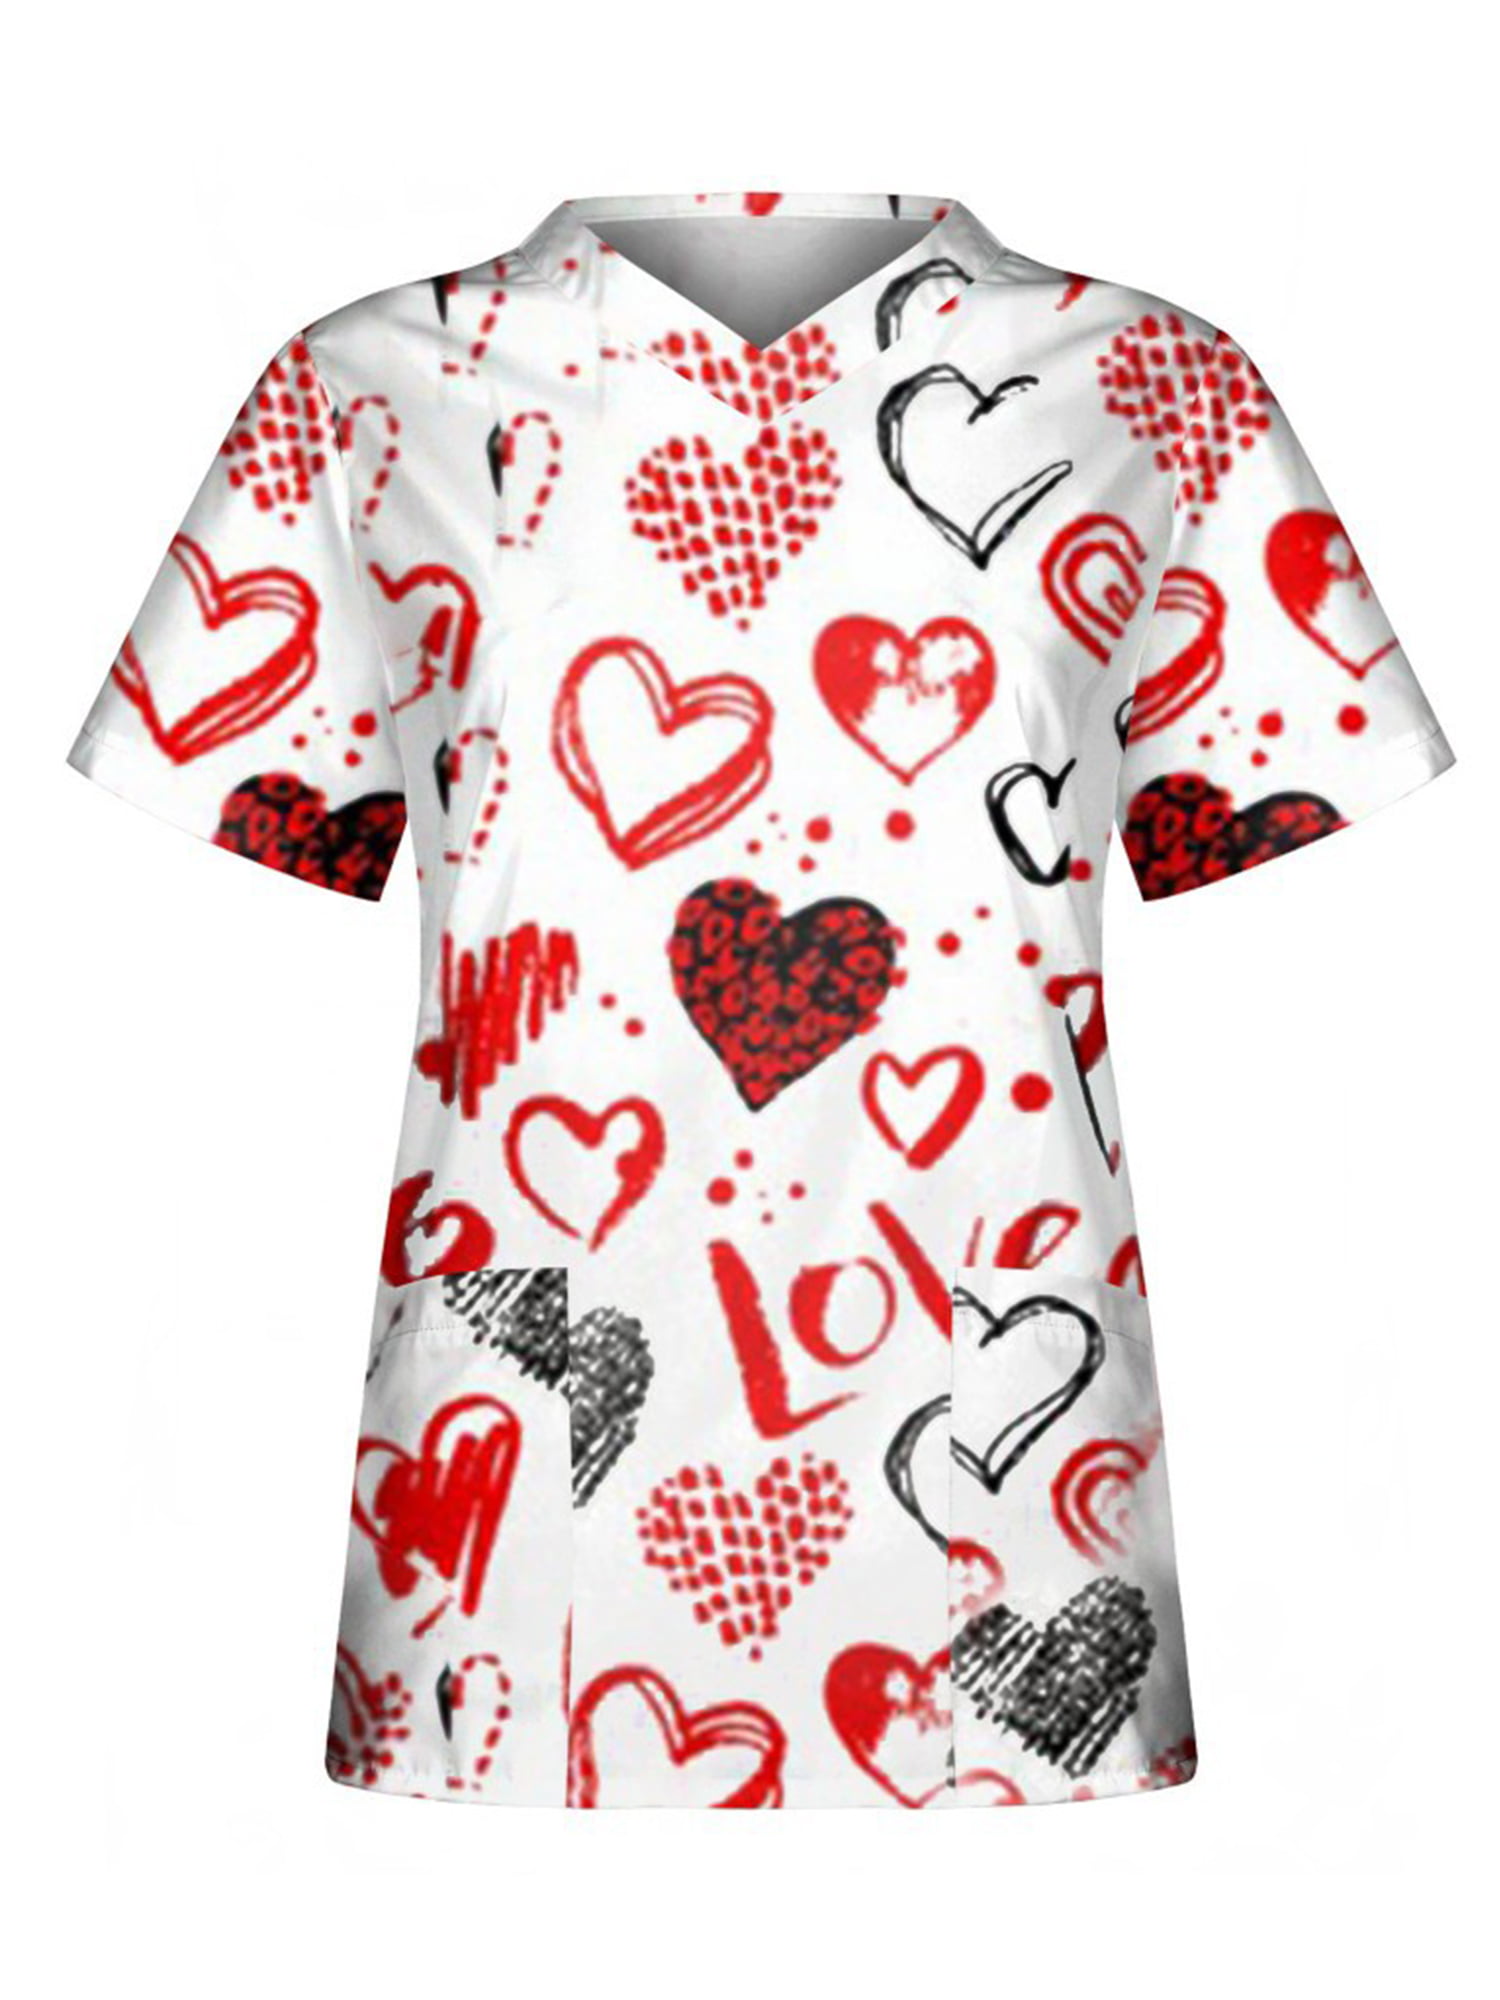 JBEELATE Valentine's Day Scrubs Tops Women Nurse Working Uniforms Love ...